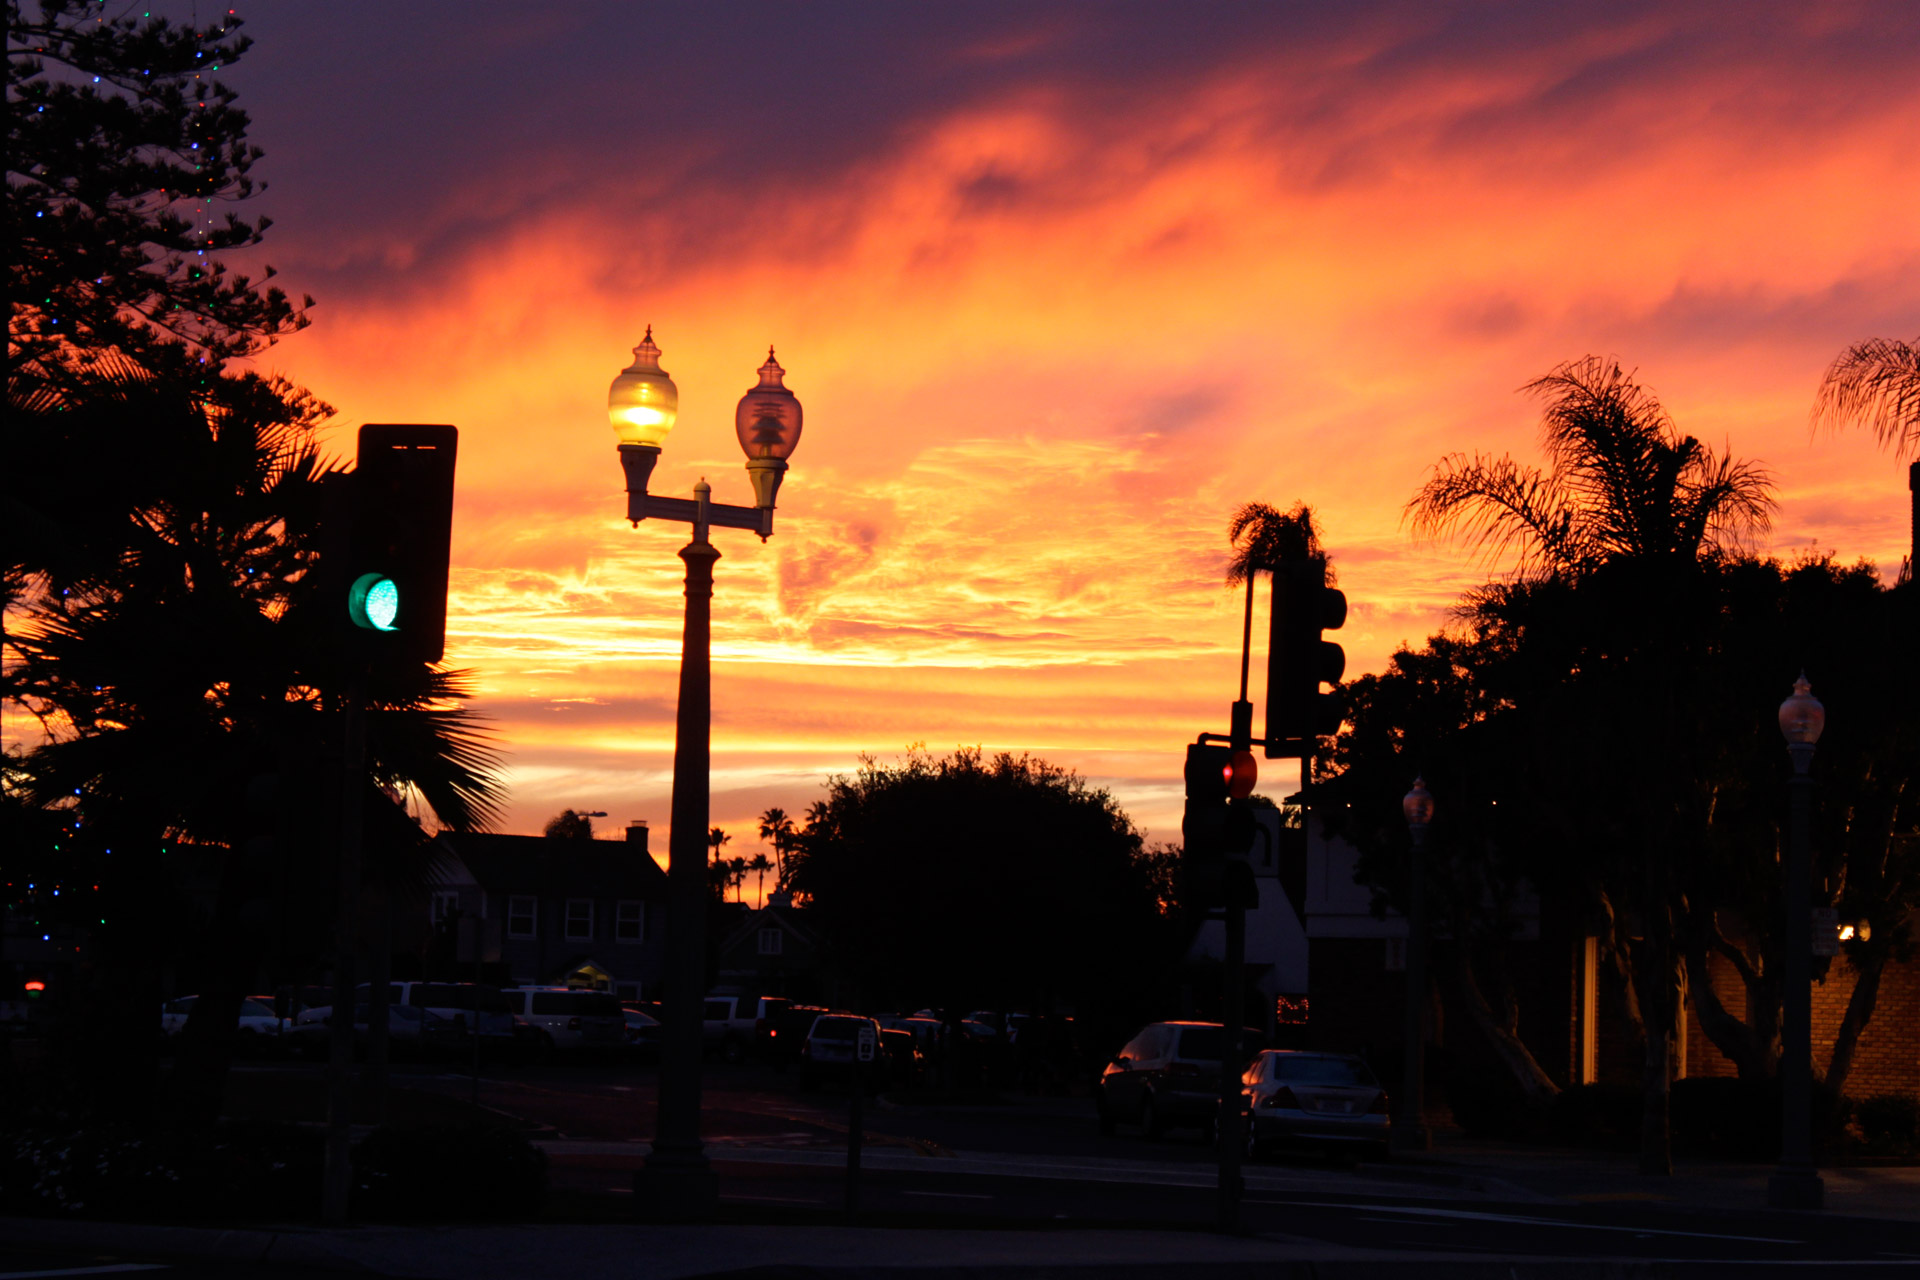 Download free photo of Sunset,holidays,beautiful,lights,lamp - from needpix.com